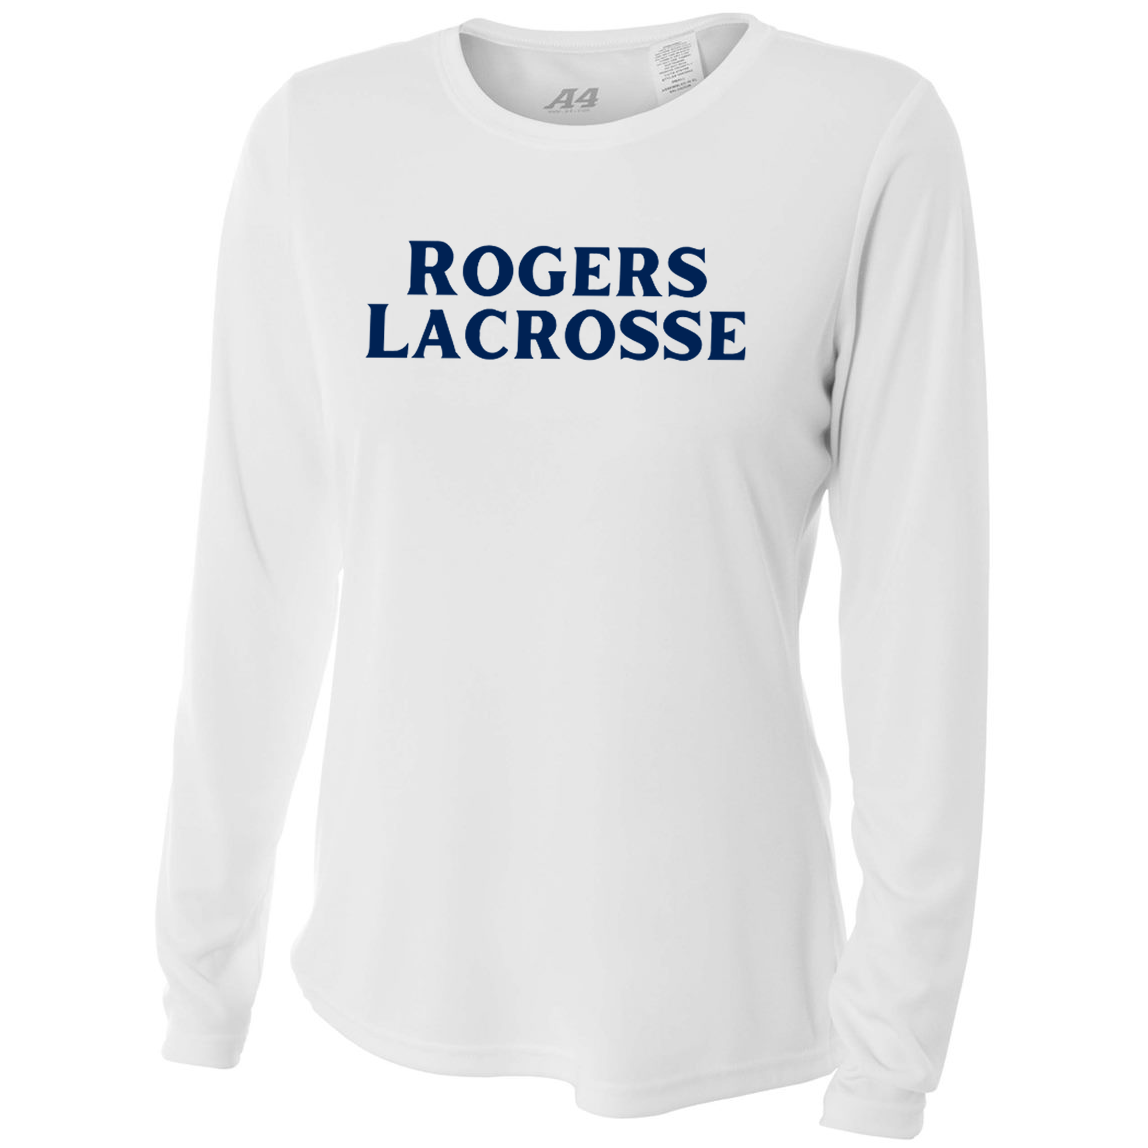 Rogers Lacrosse Women's Long Sleeve Performance Crew